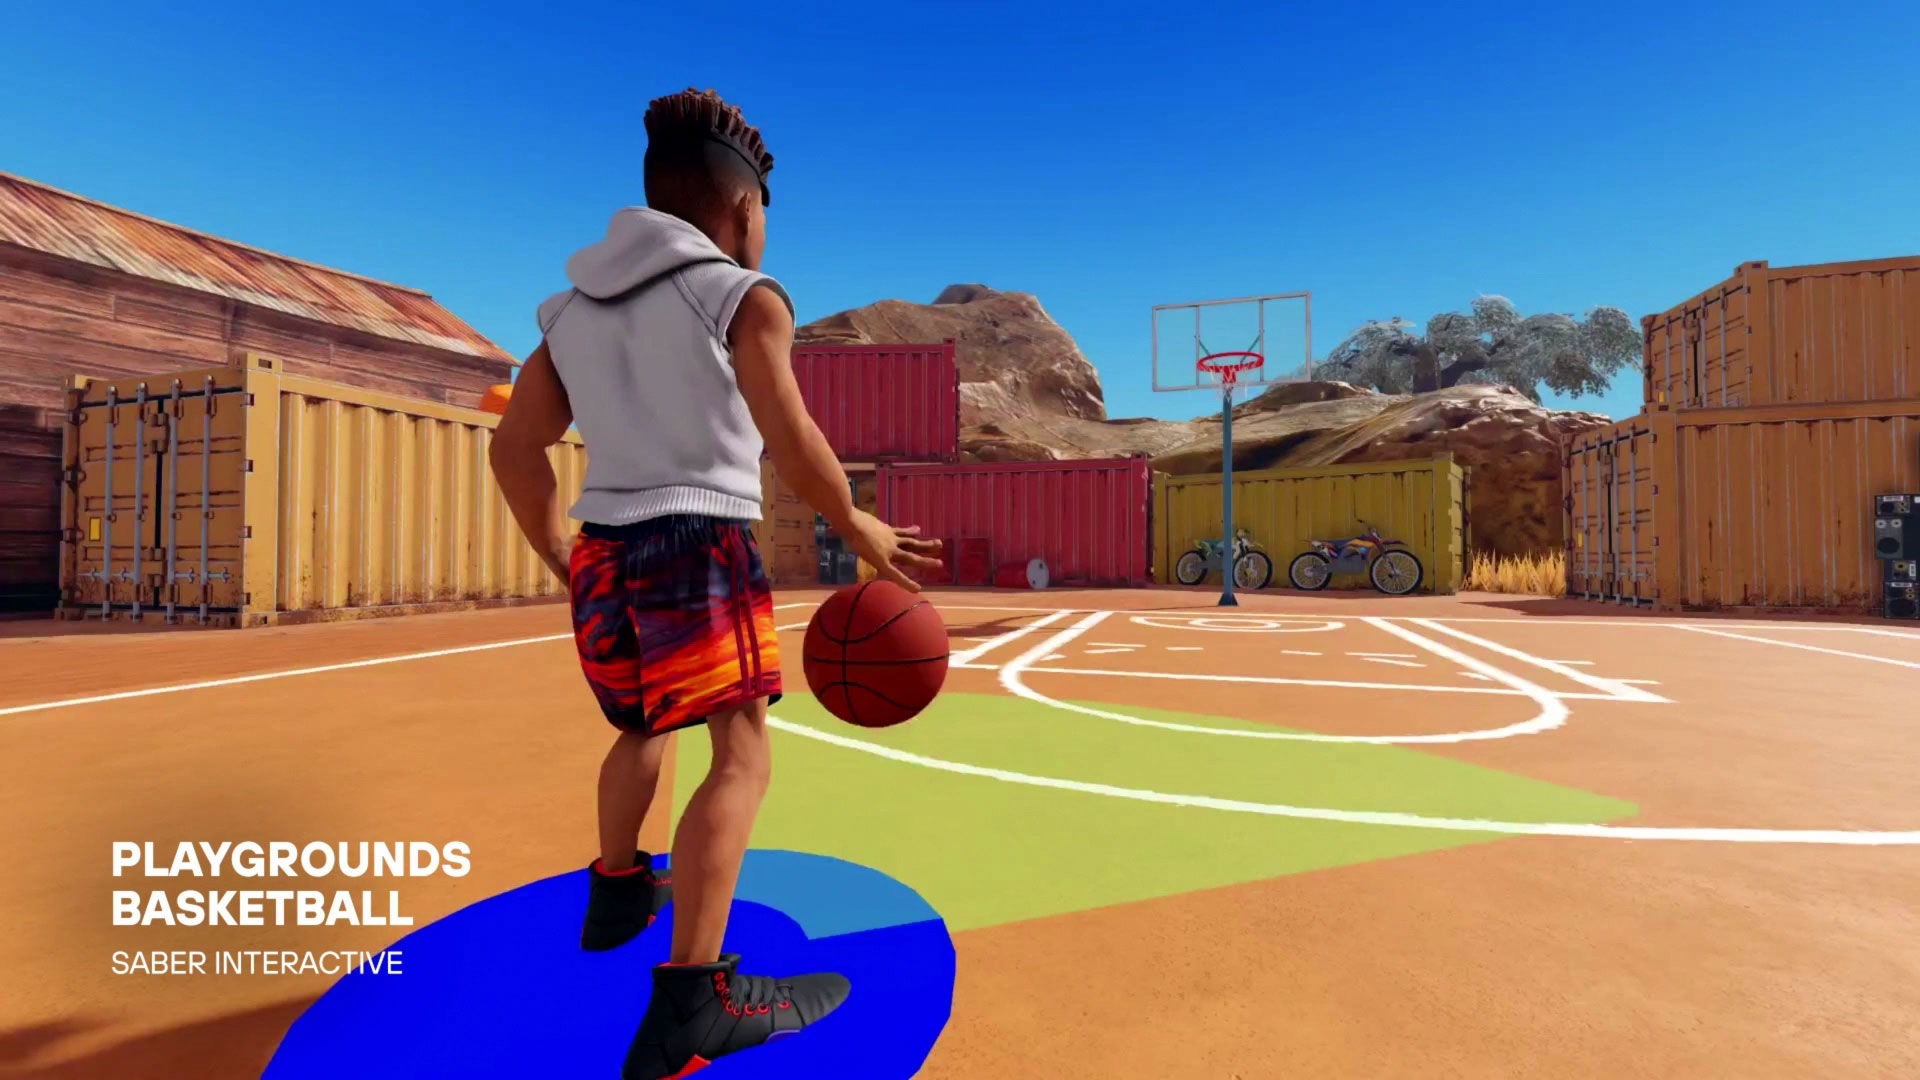 Roblox na PS5 Experiência de basquetebol nos parques infantis